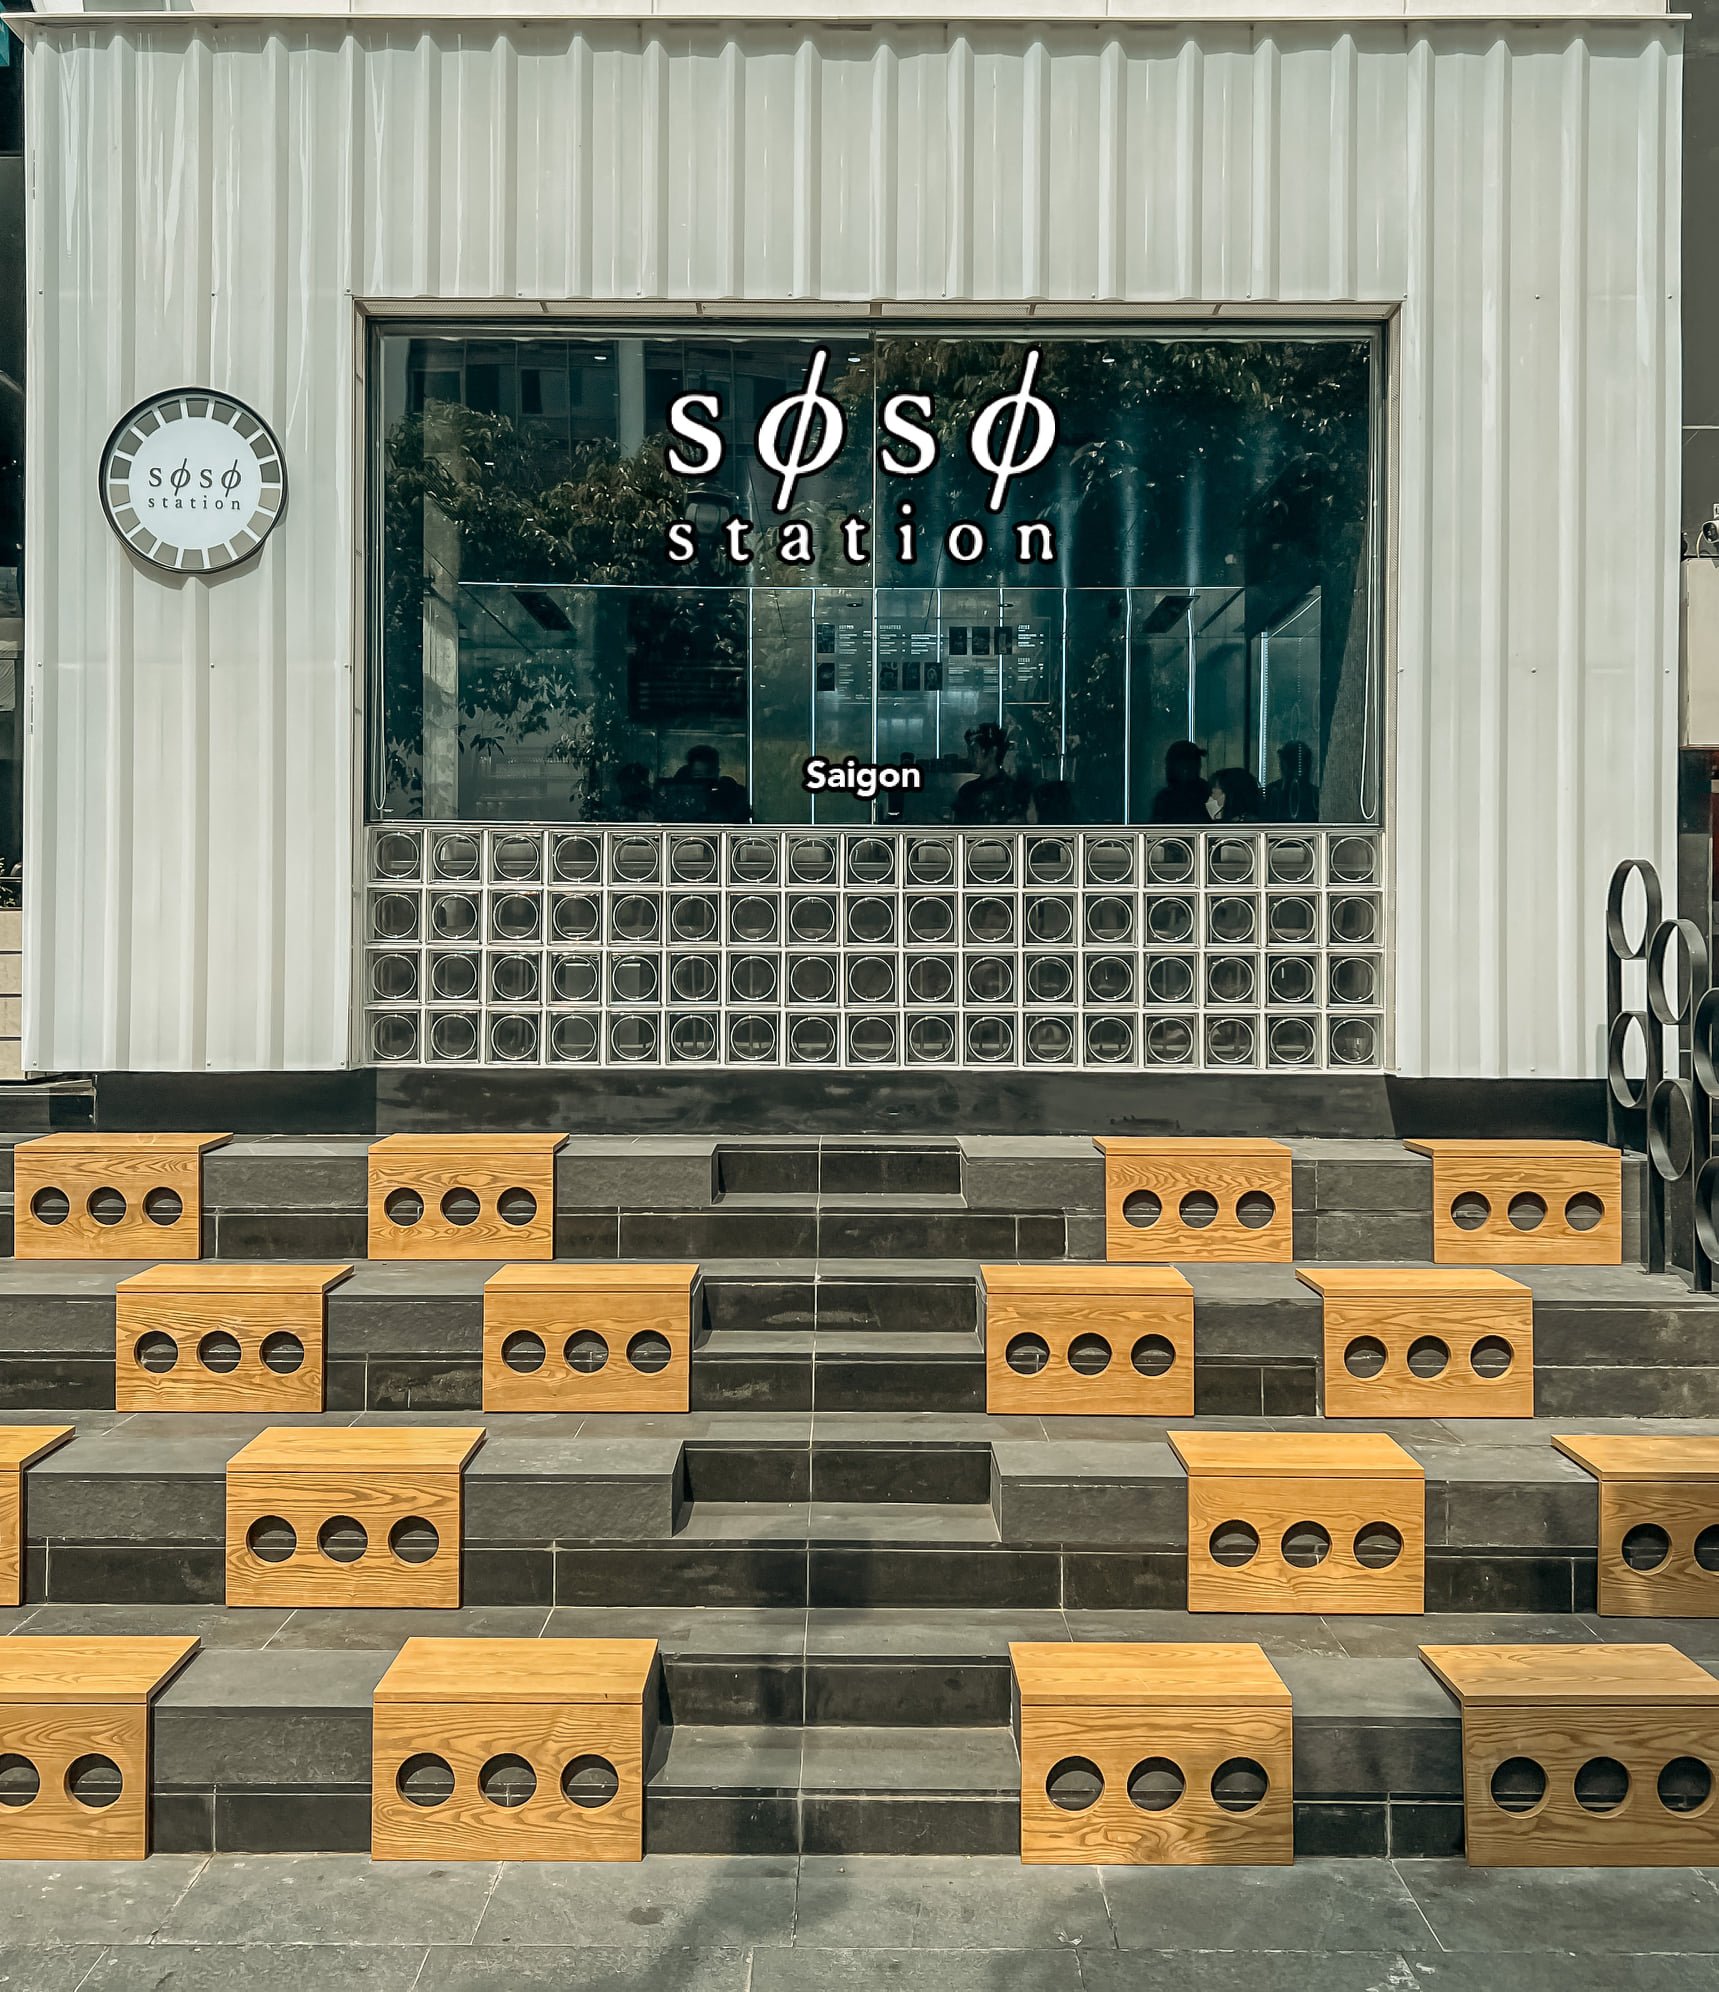 SoSo Station